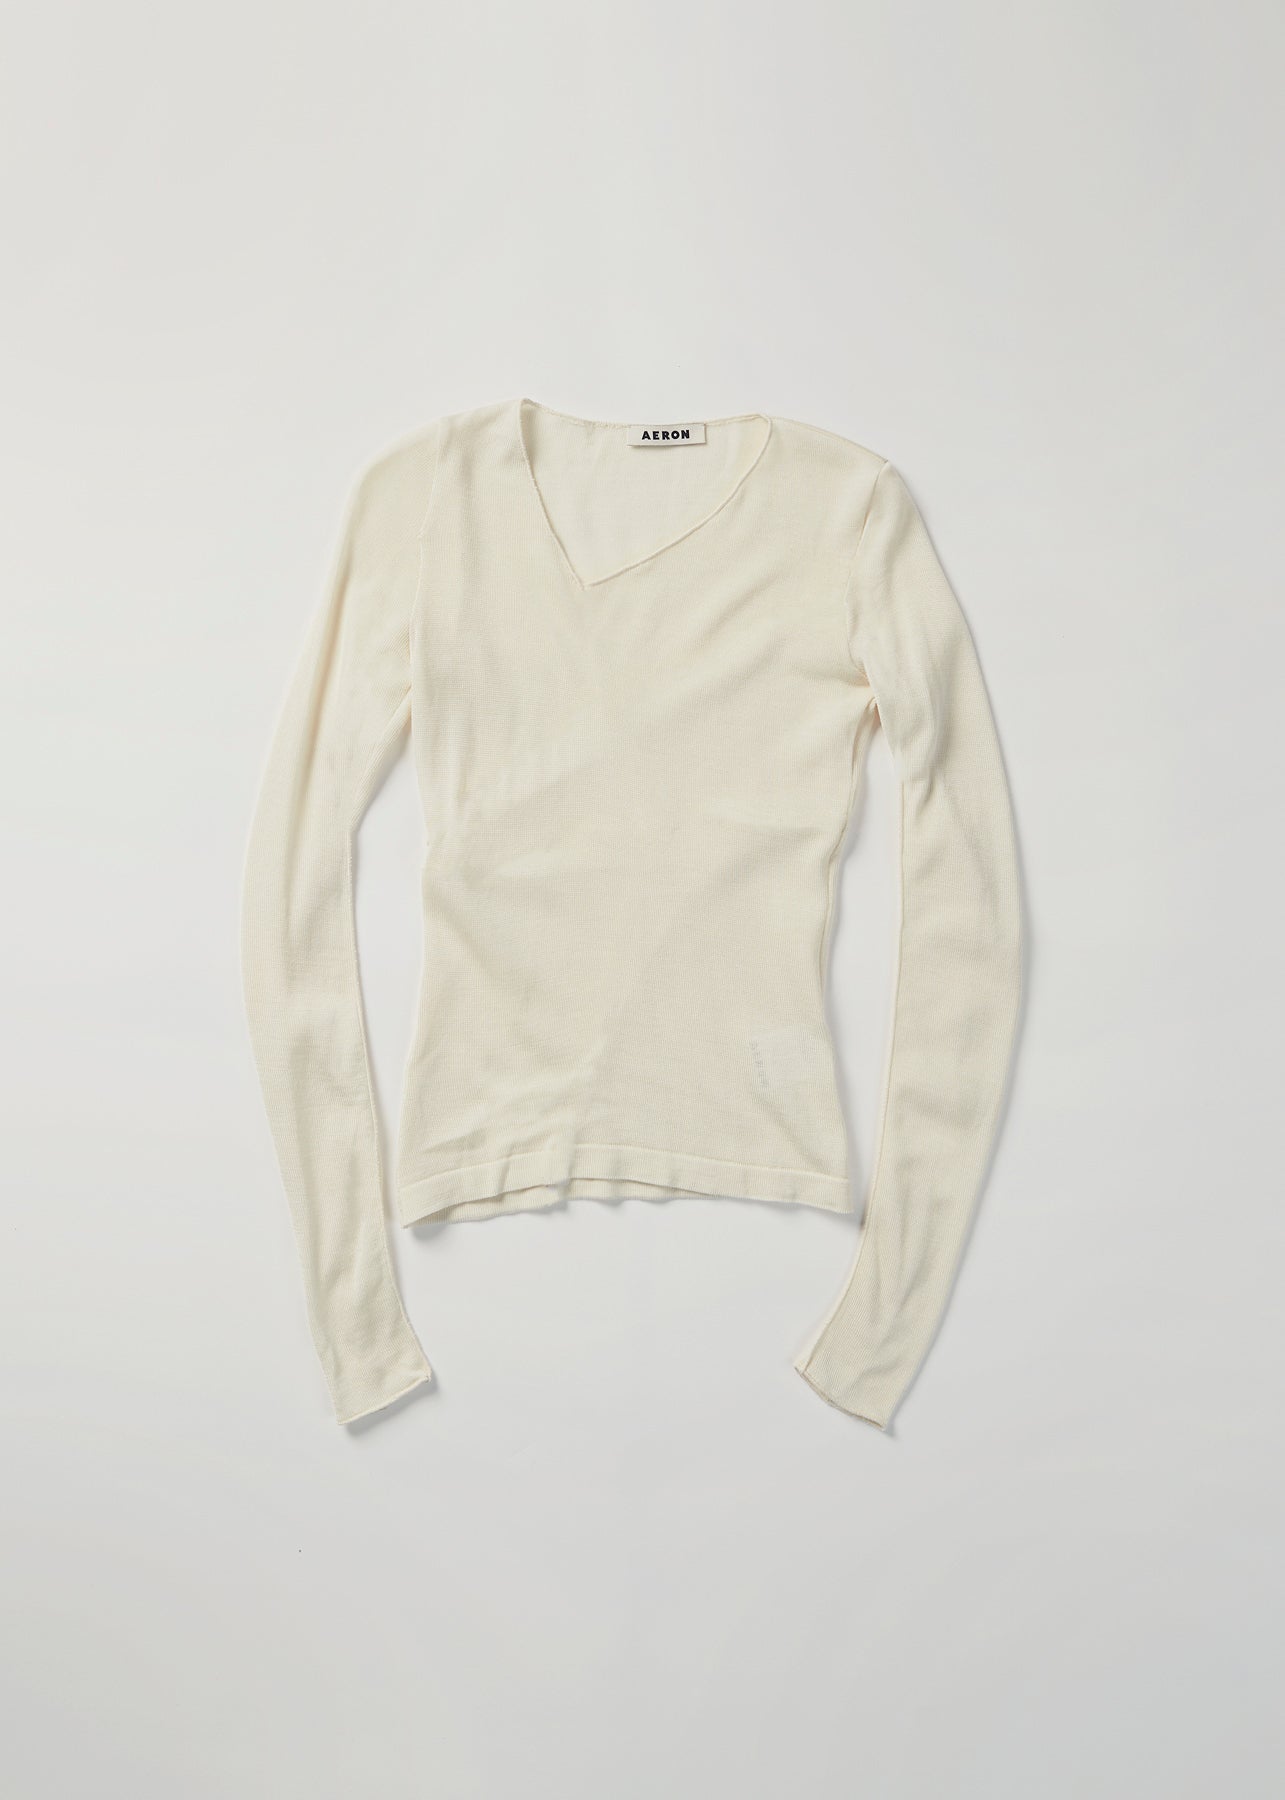 AERON FRAME Asymmetric V-neck wool sweater – beige